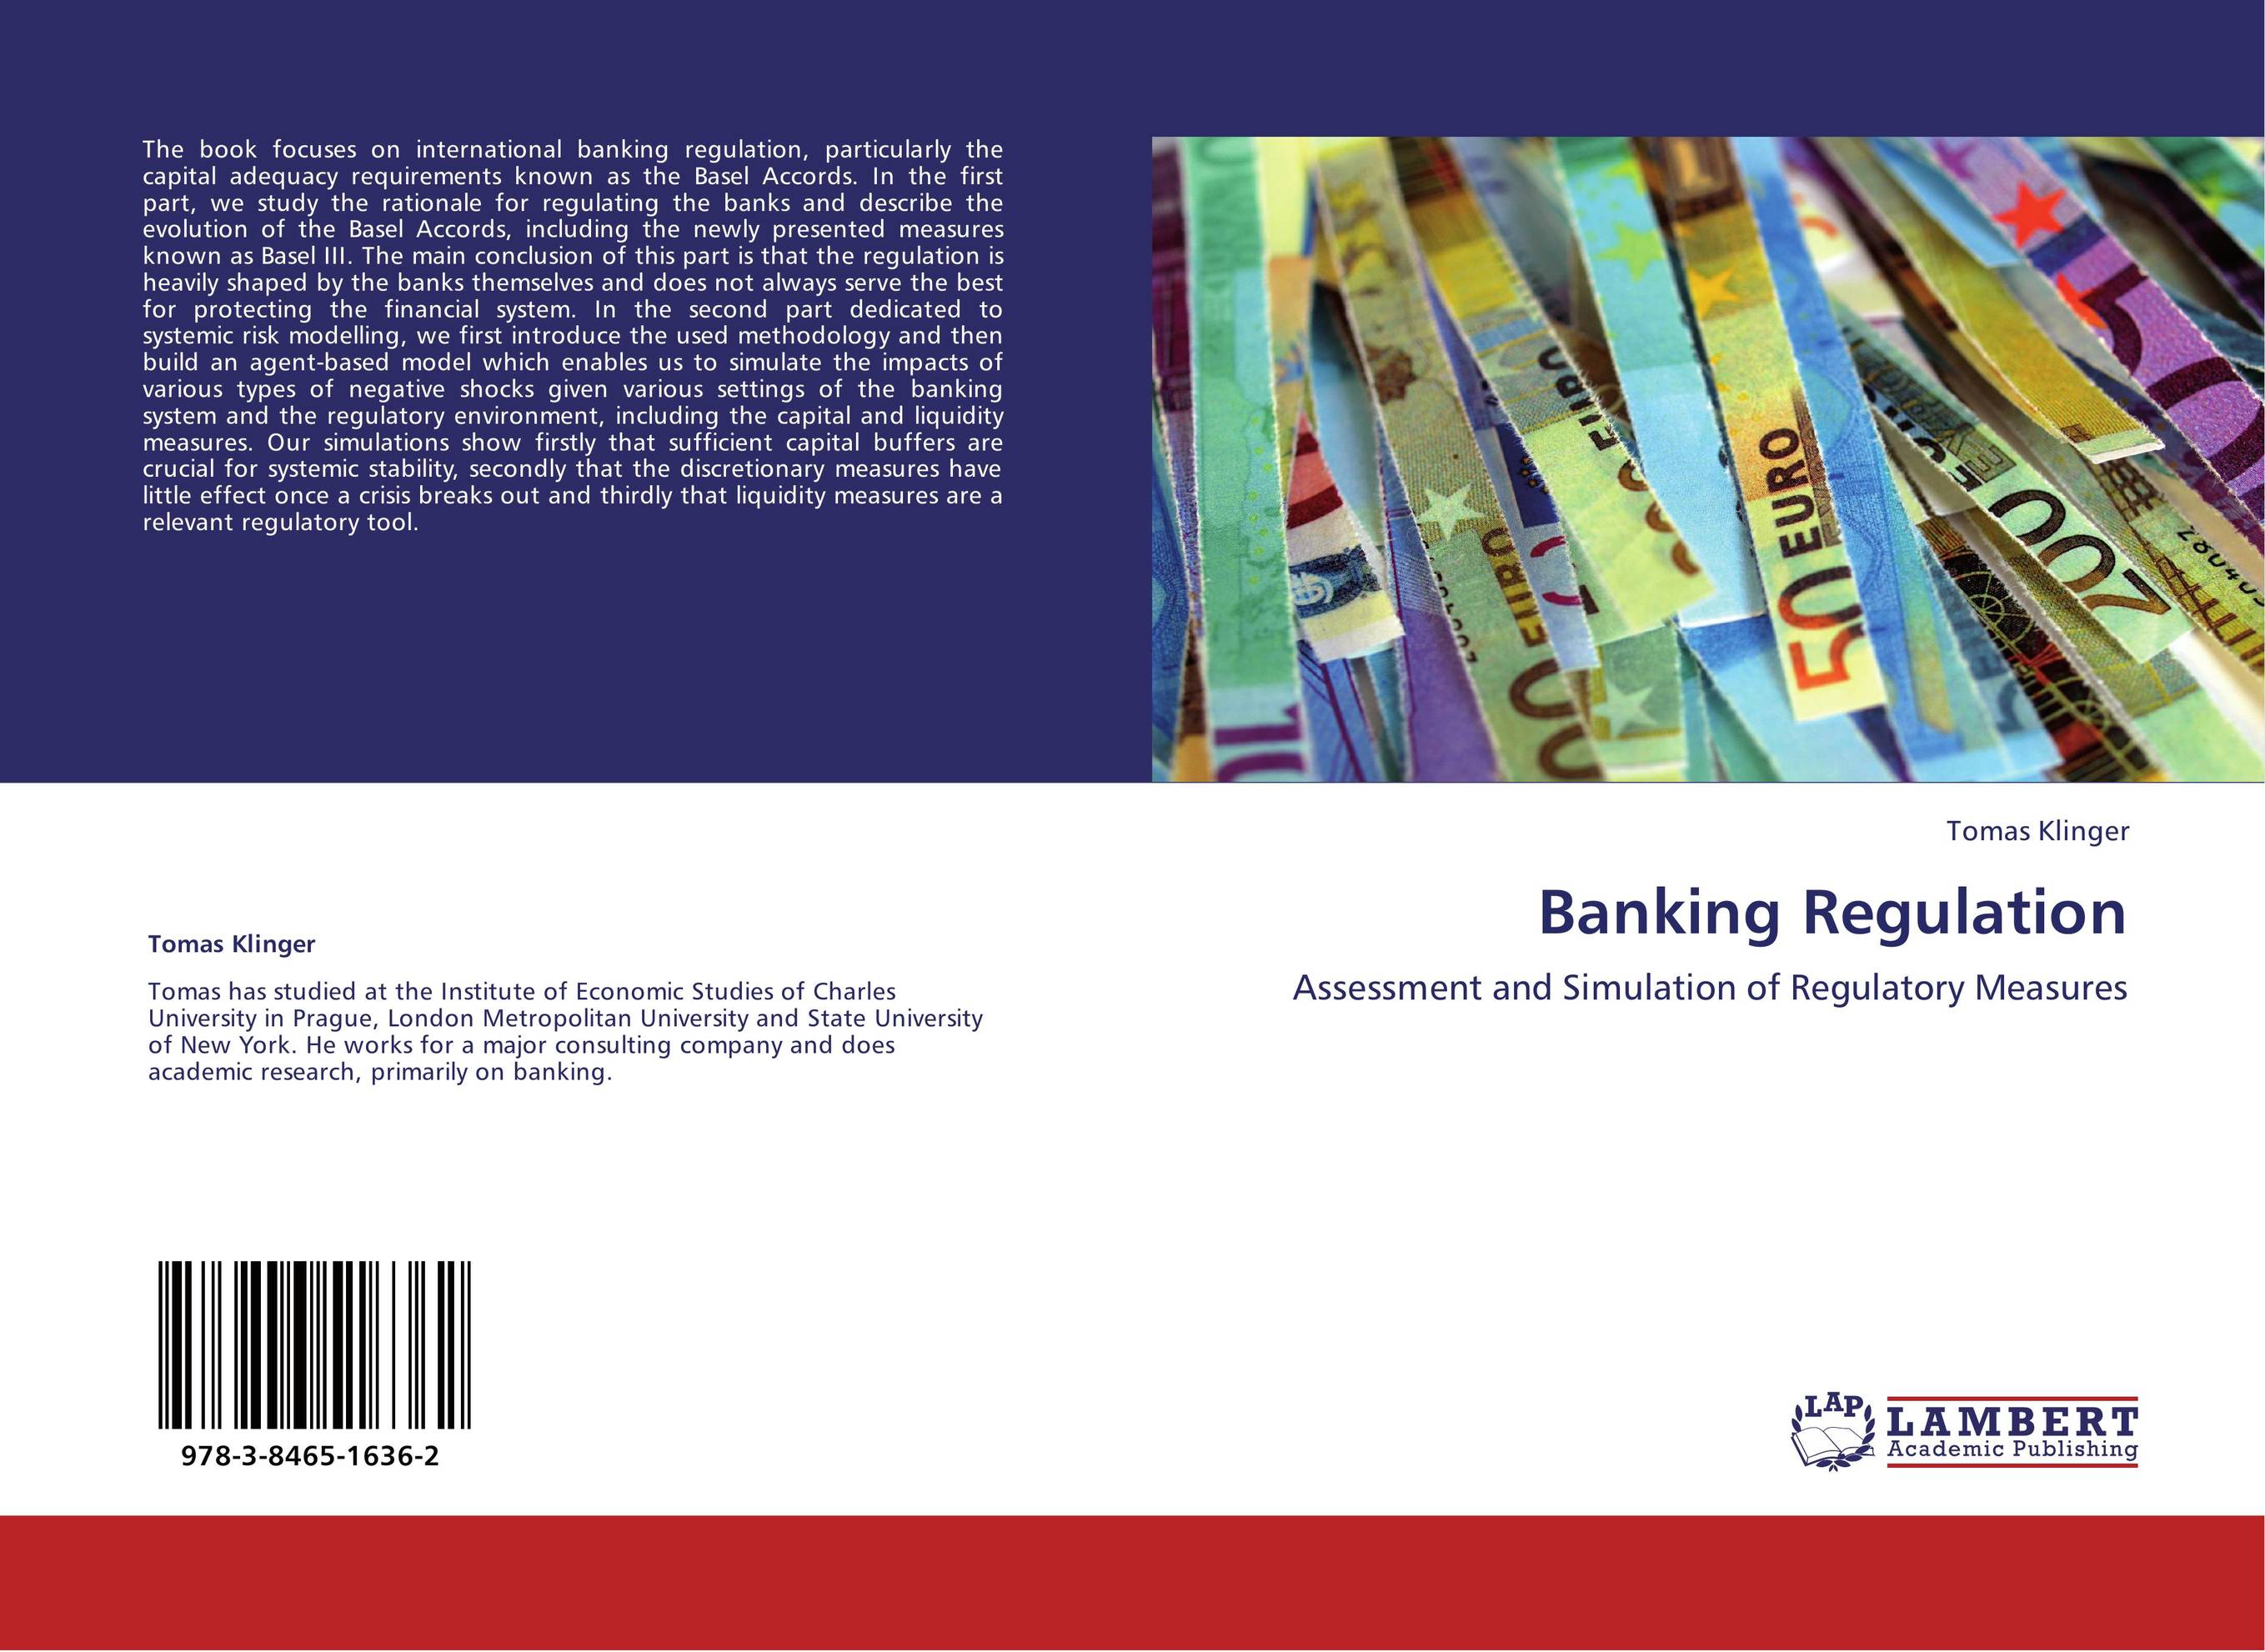 Banking regulations